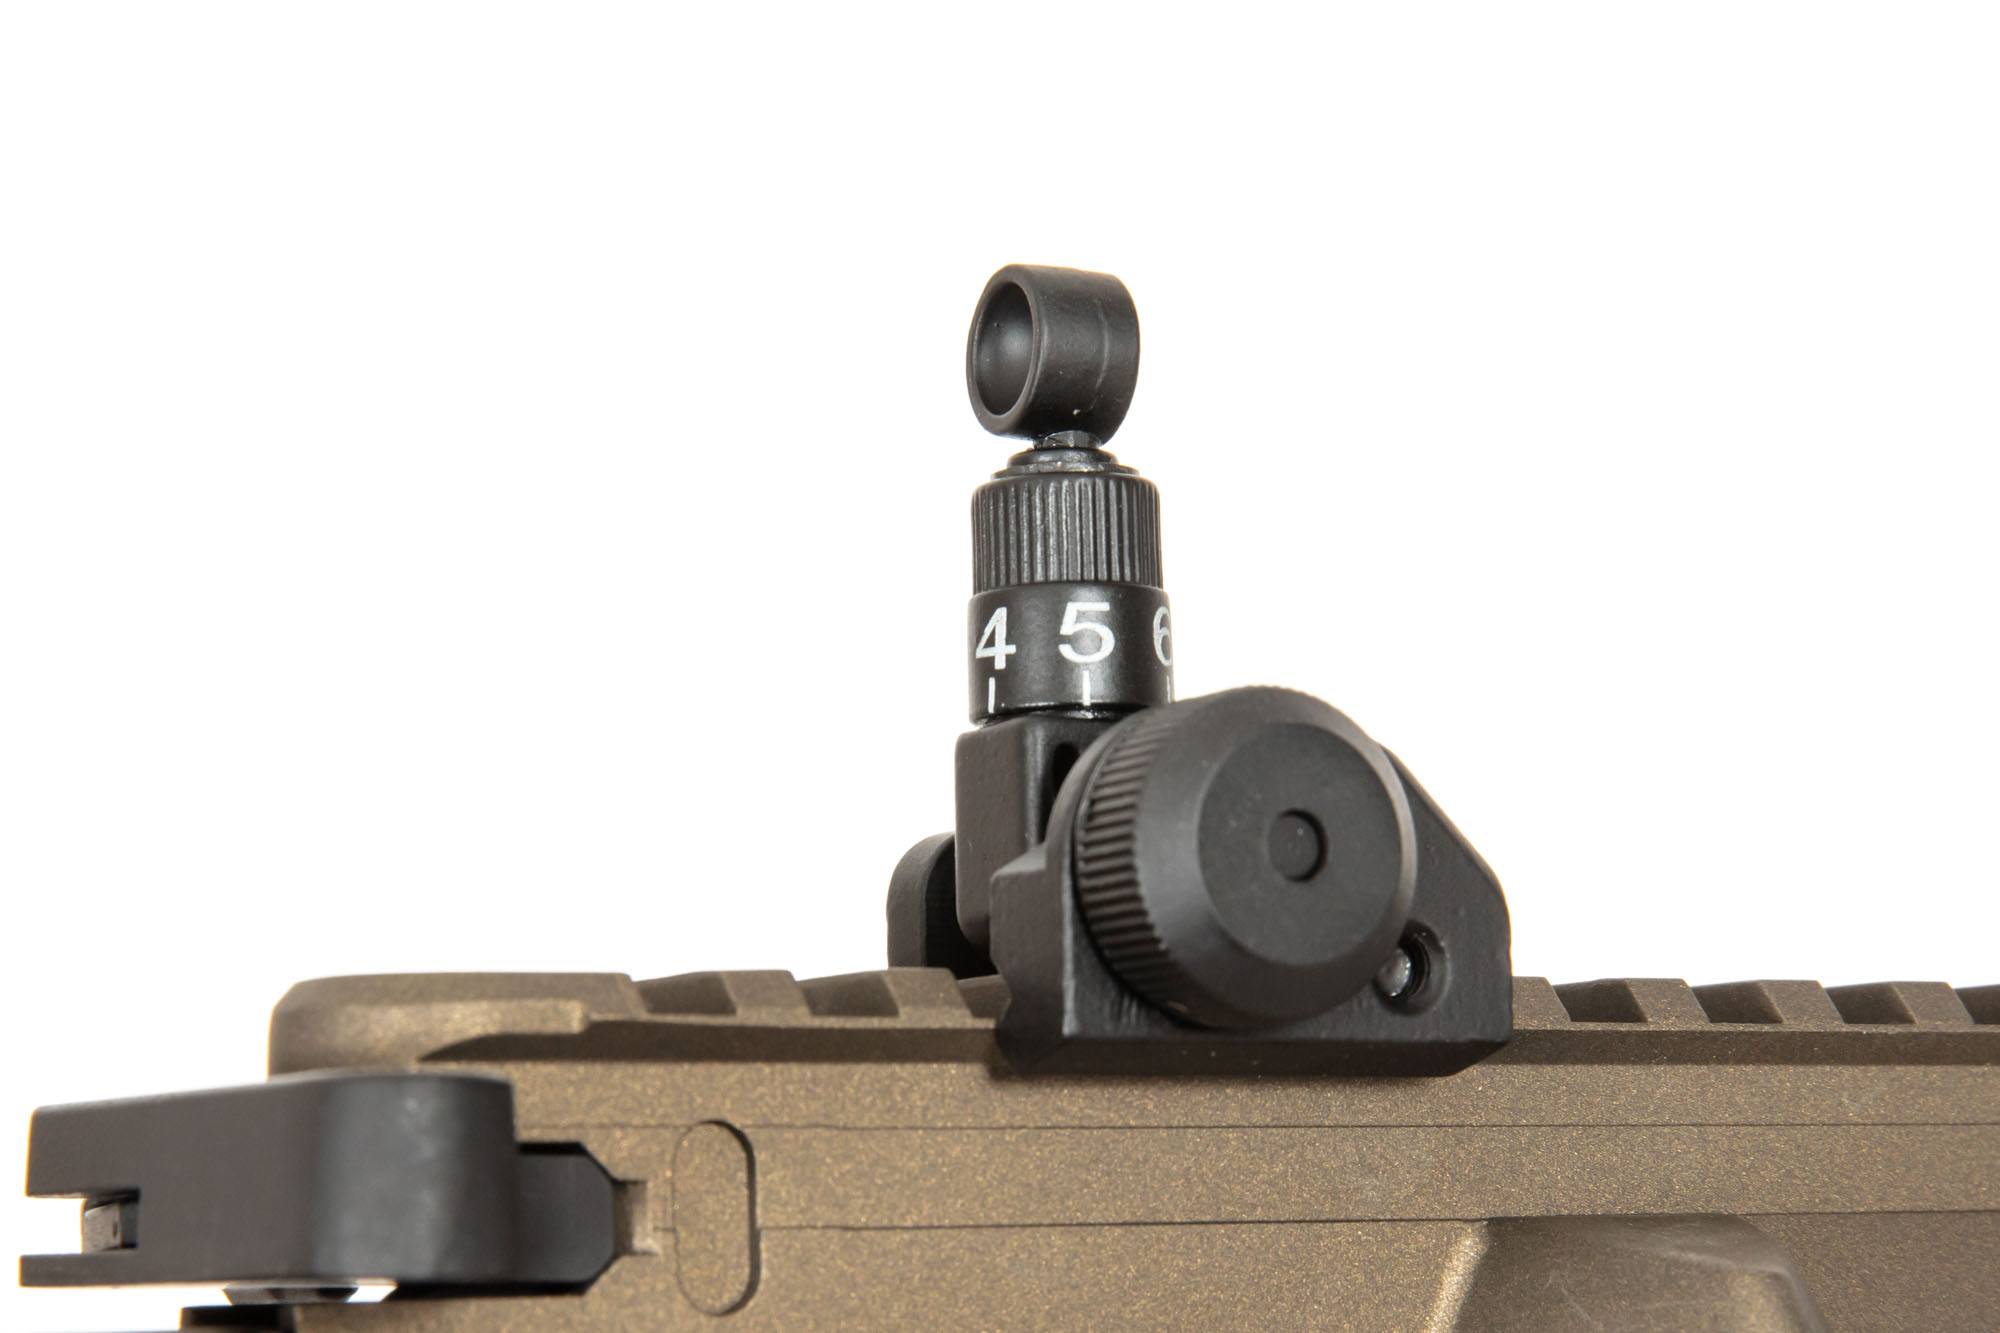 HK416 A5 extended rear sight 